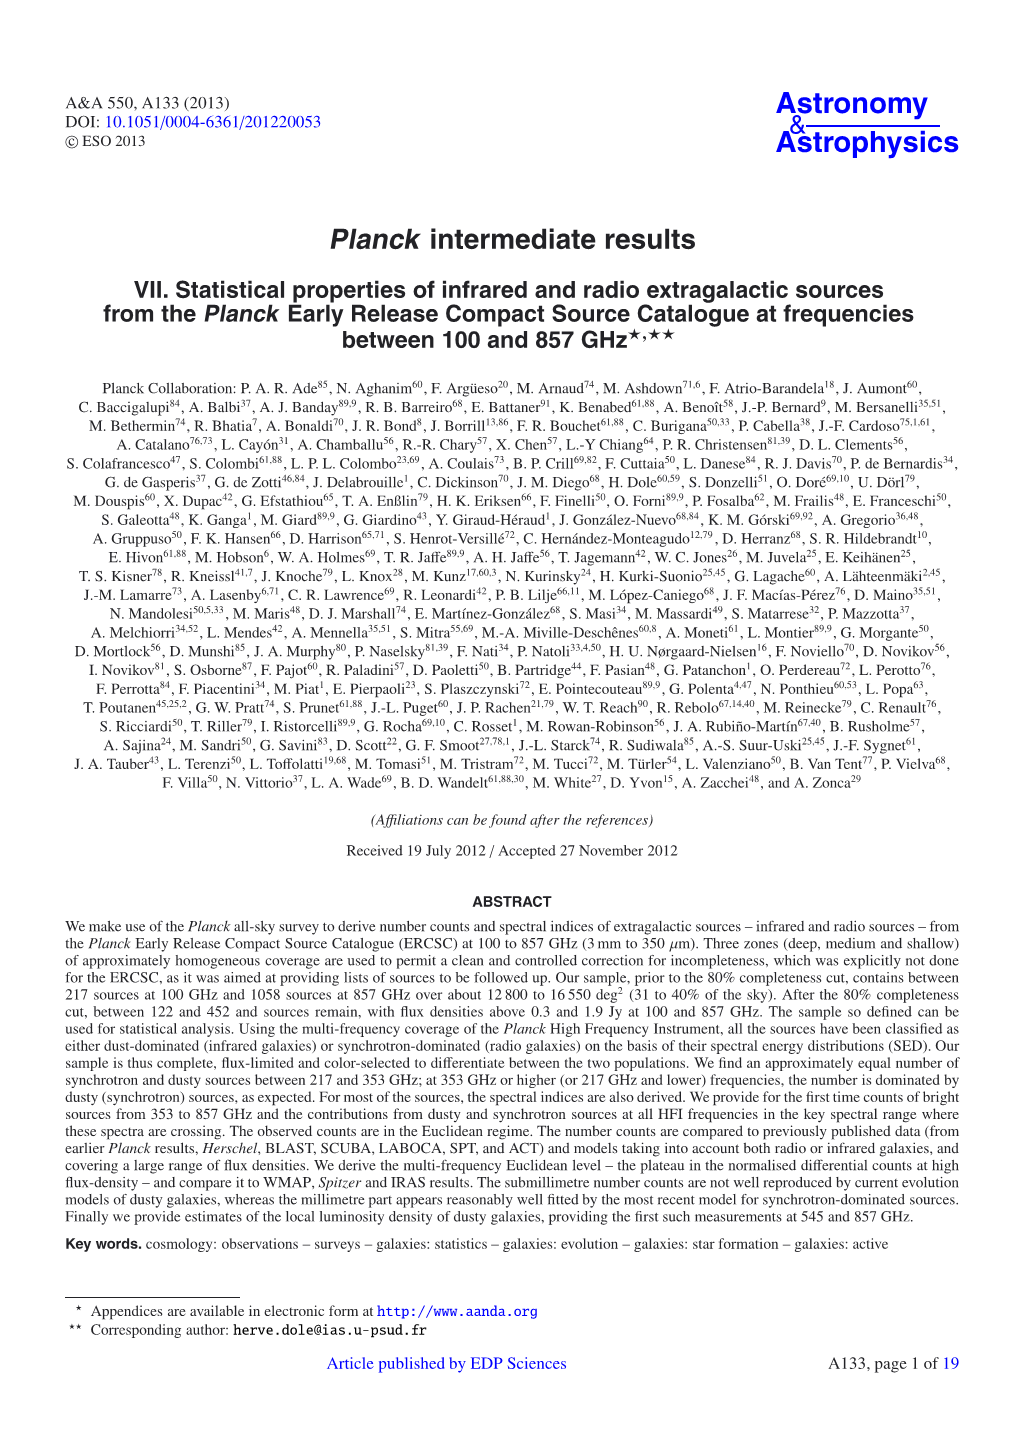 Planck Intermediate Results